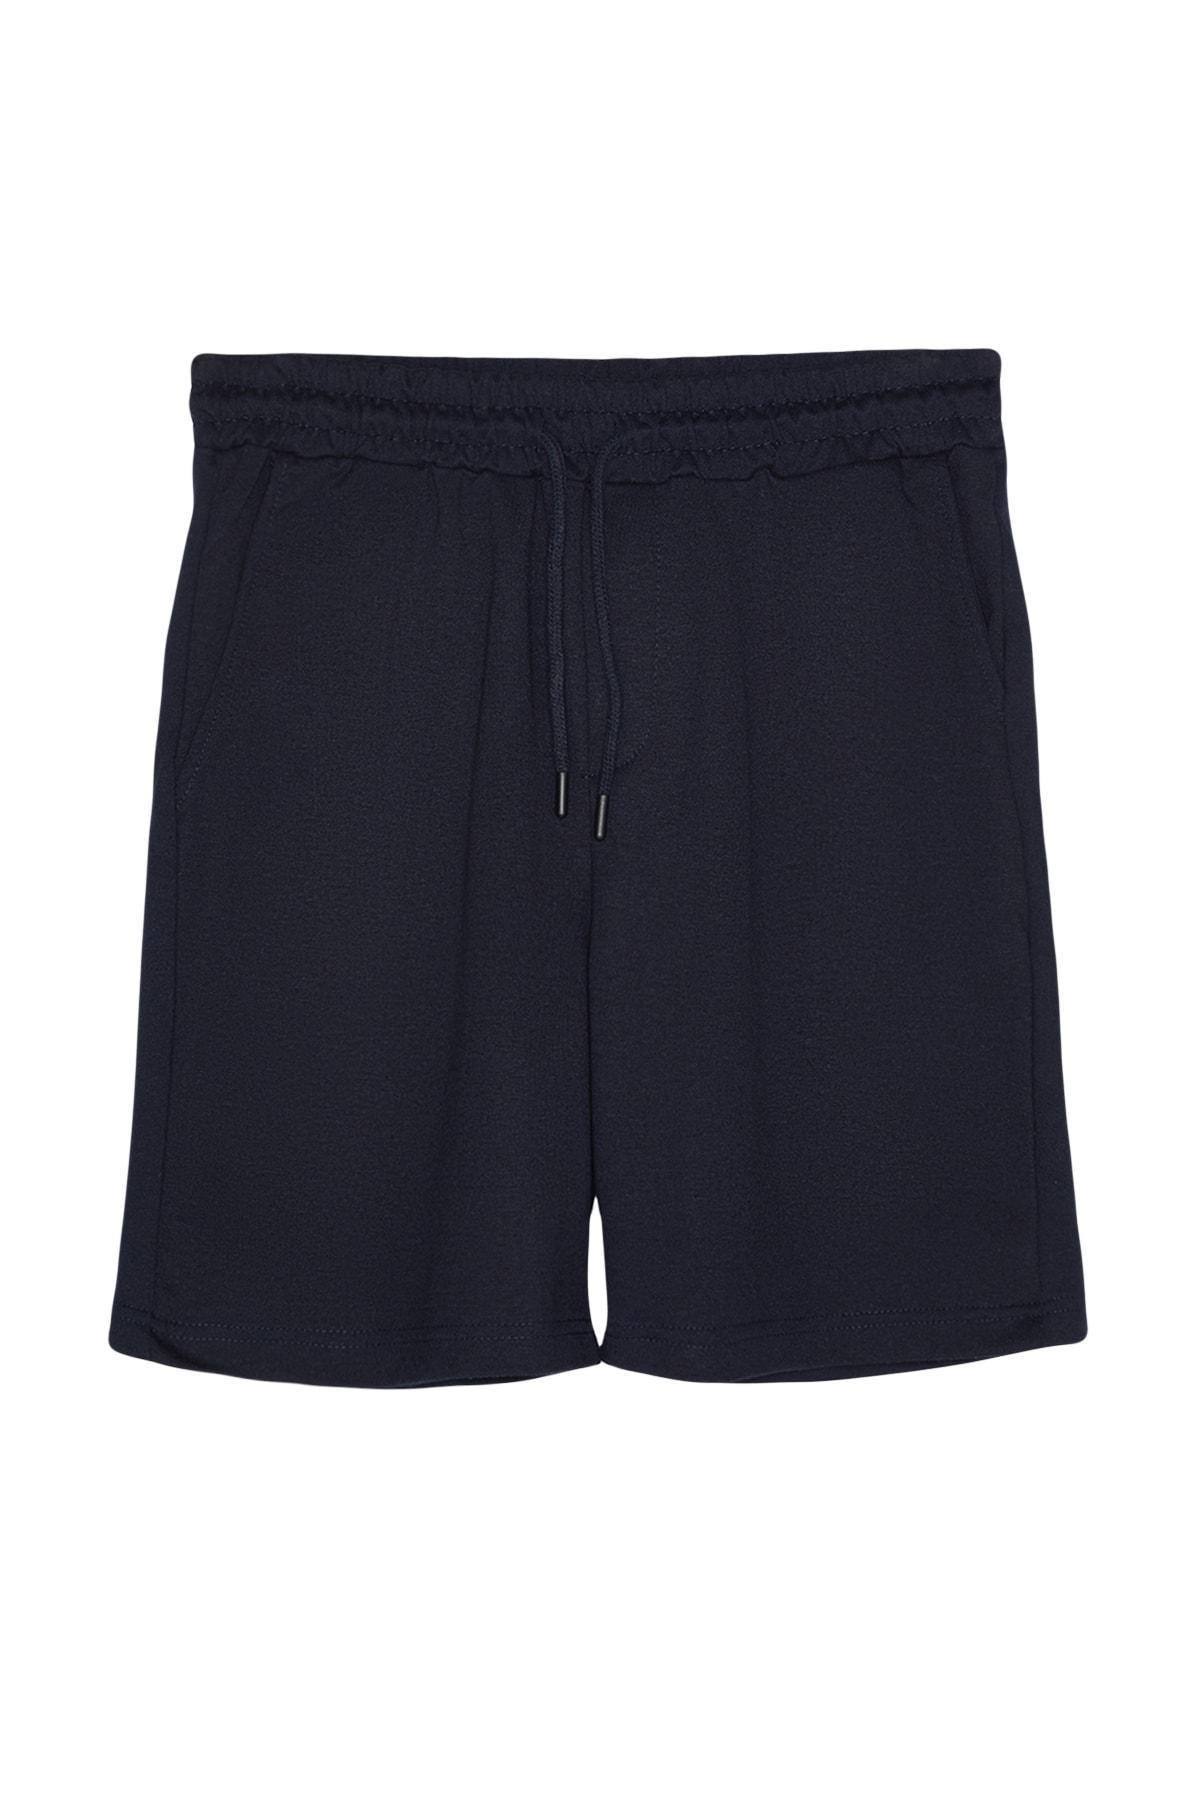 Trendyol - Multicolour Mid-Waist Shorts, Set Of 2